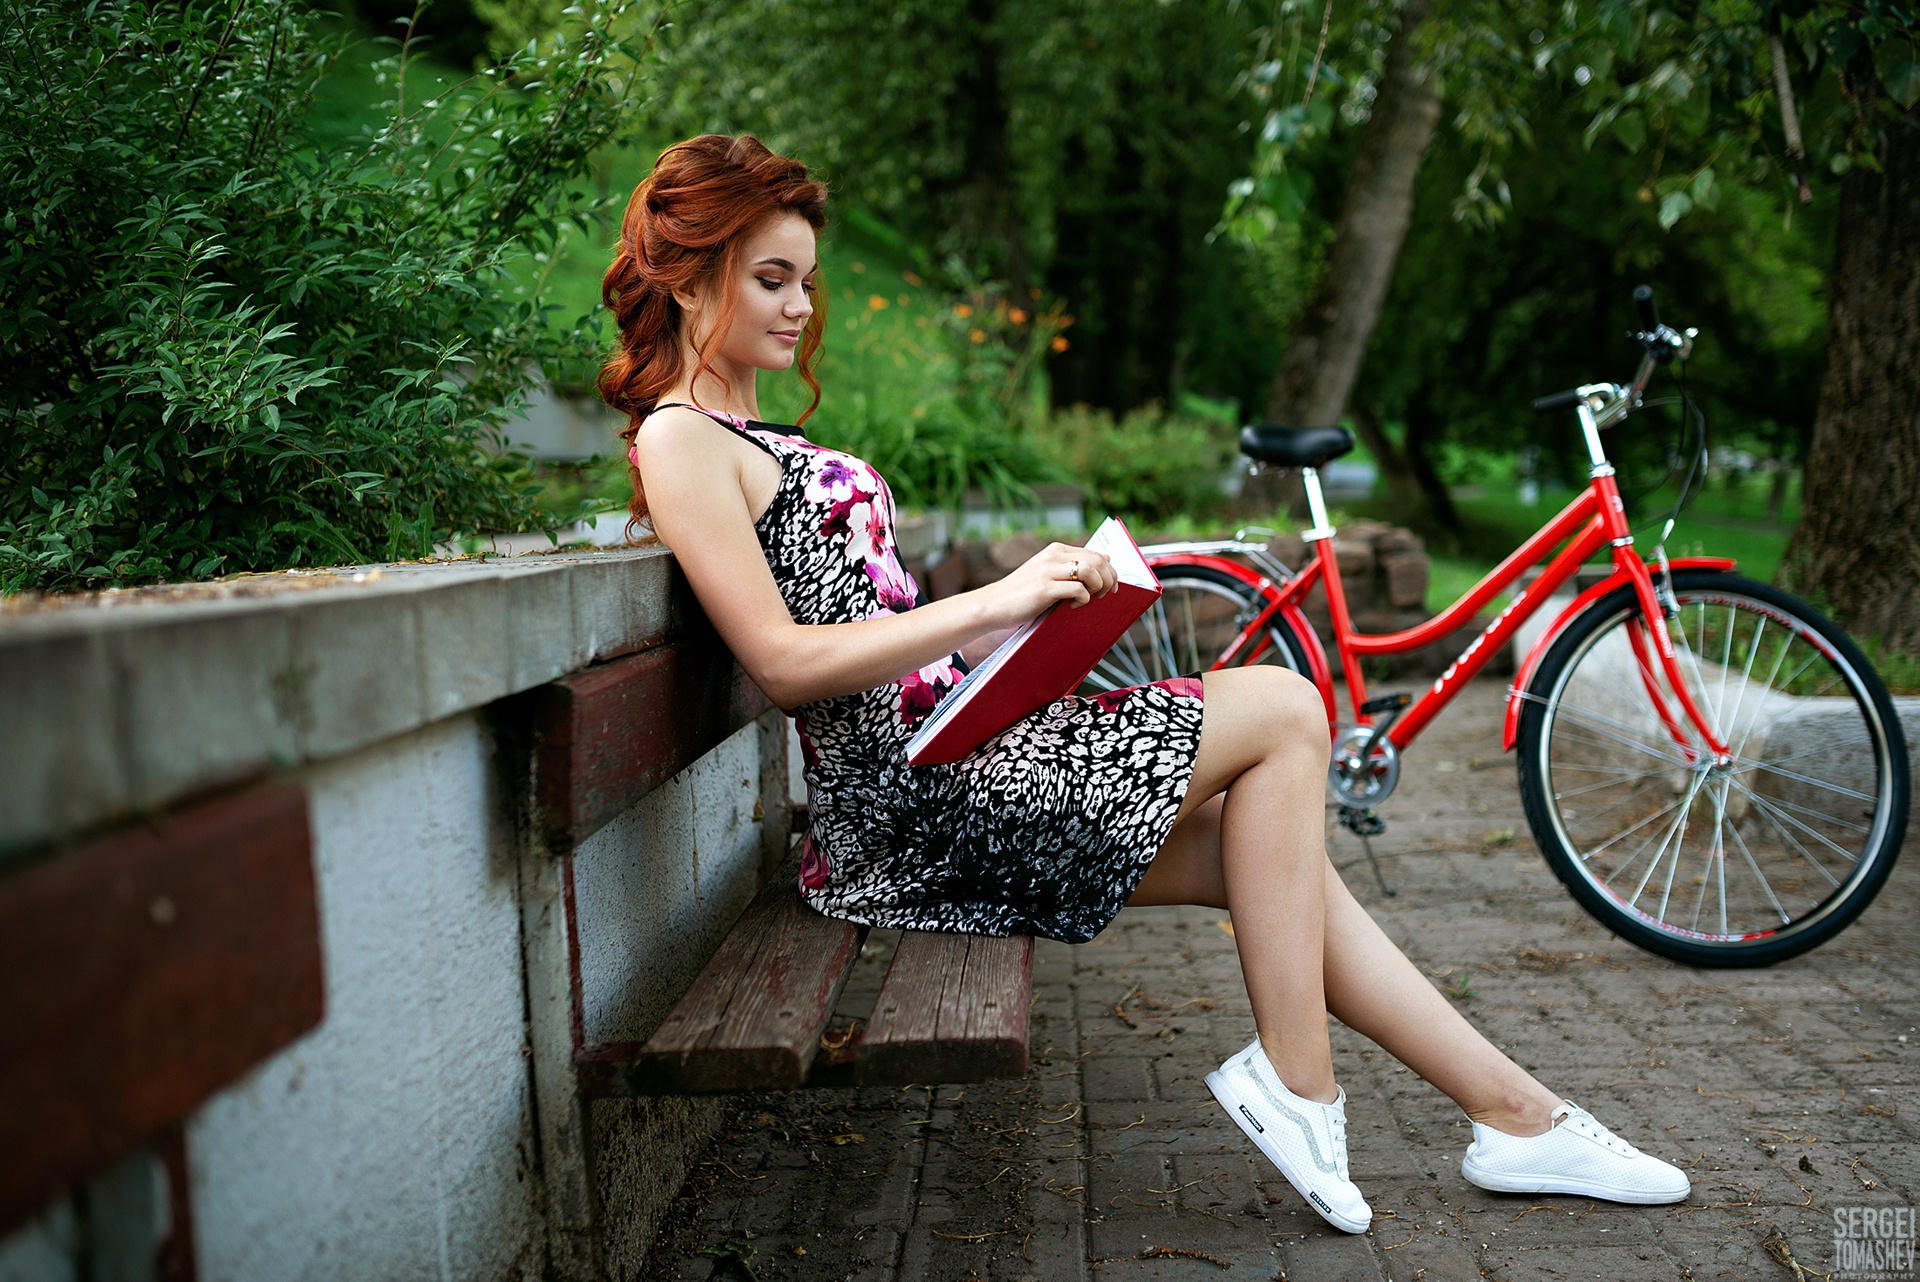 Bench Women Bicycle Sitting Model Redhead Women Outdoors Sergei Tomashev 1920x1282